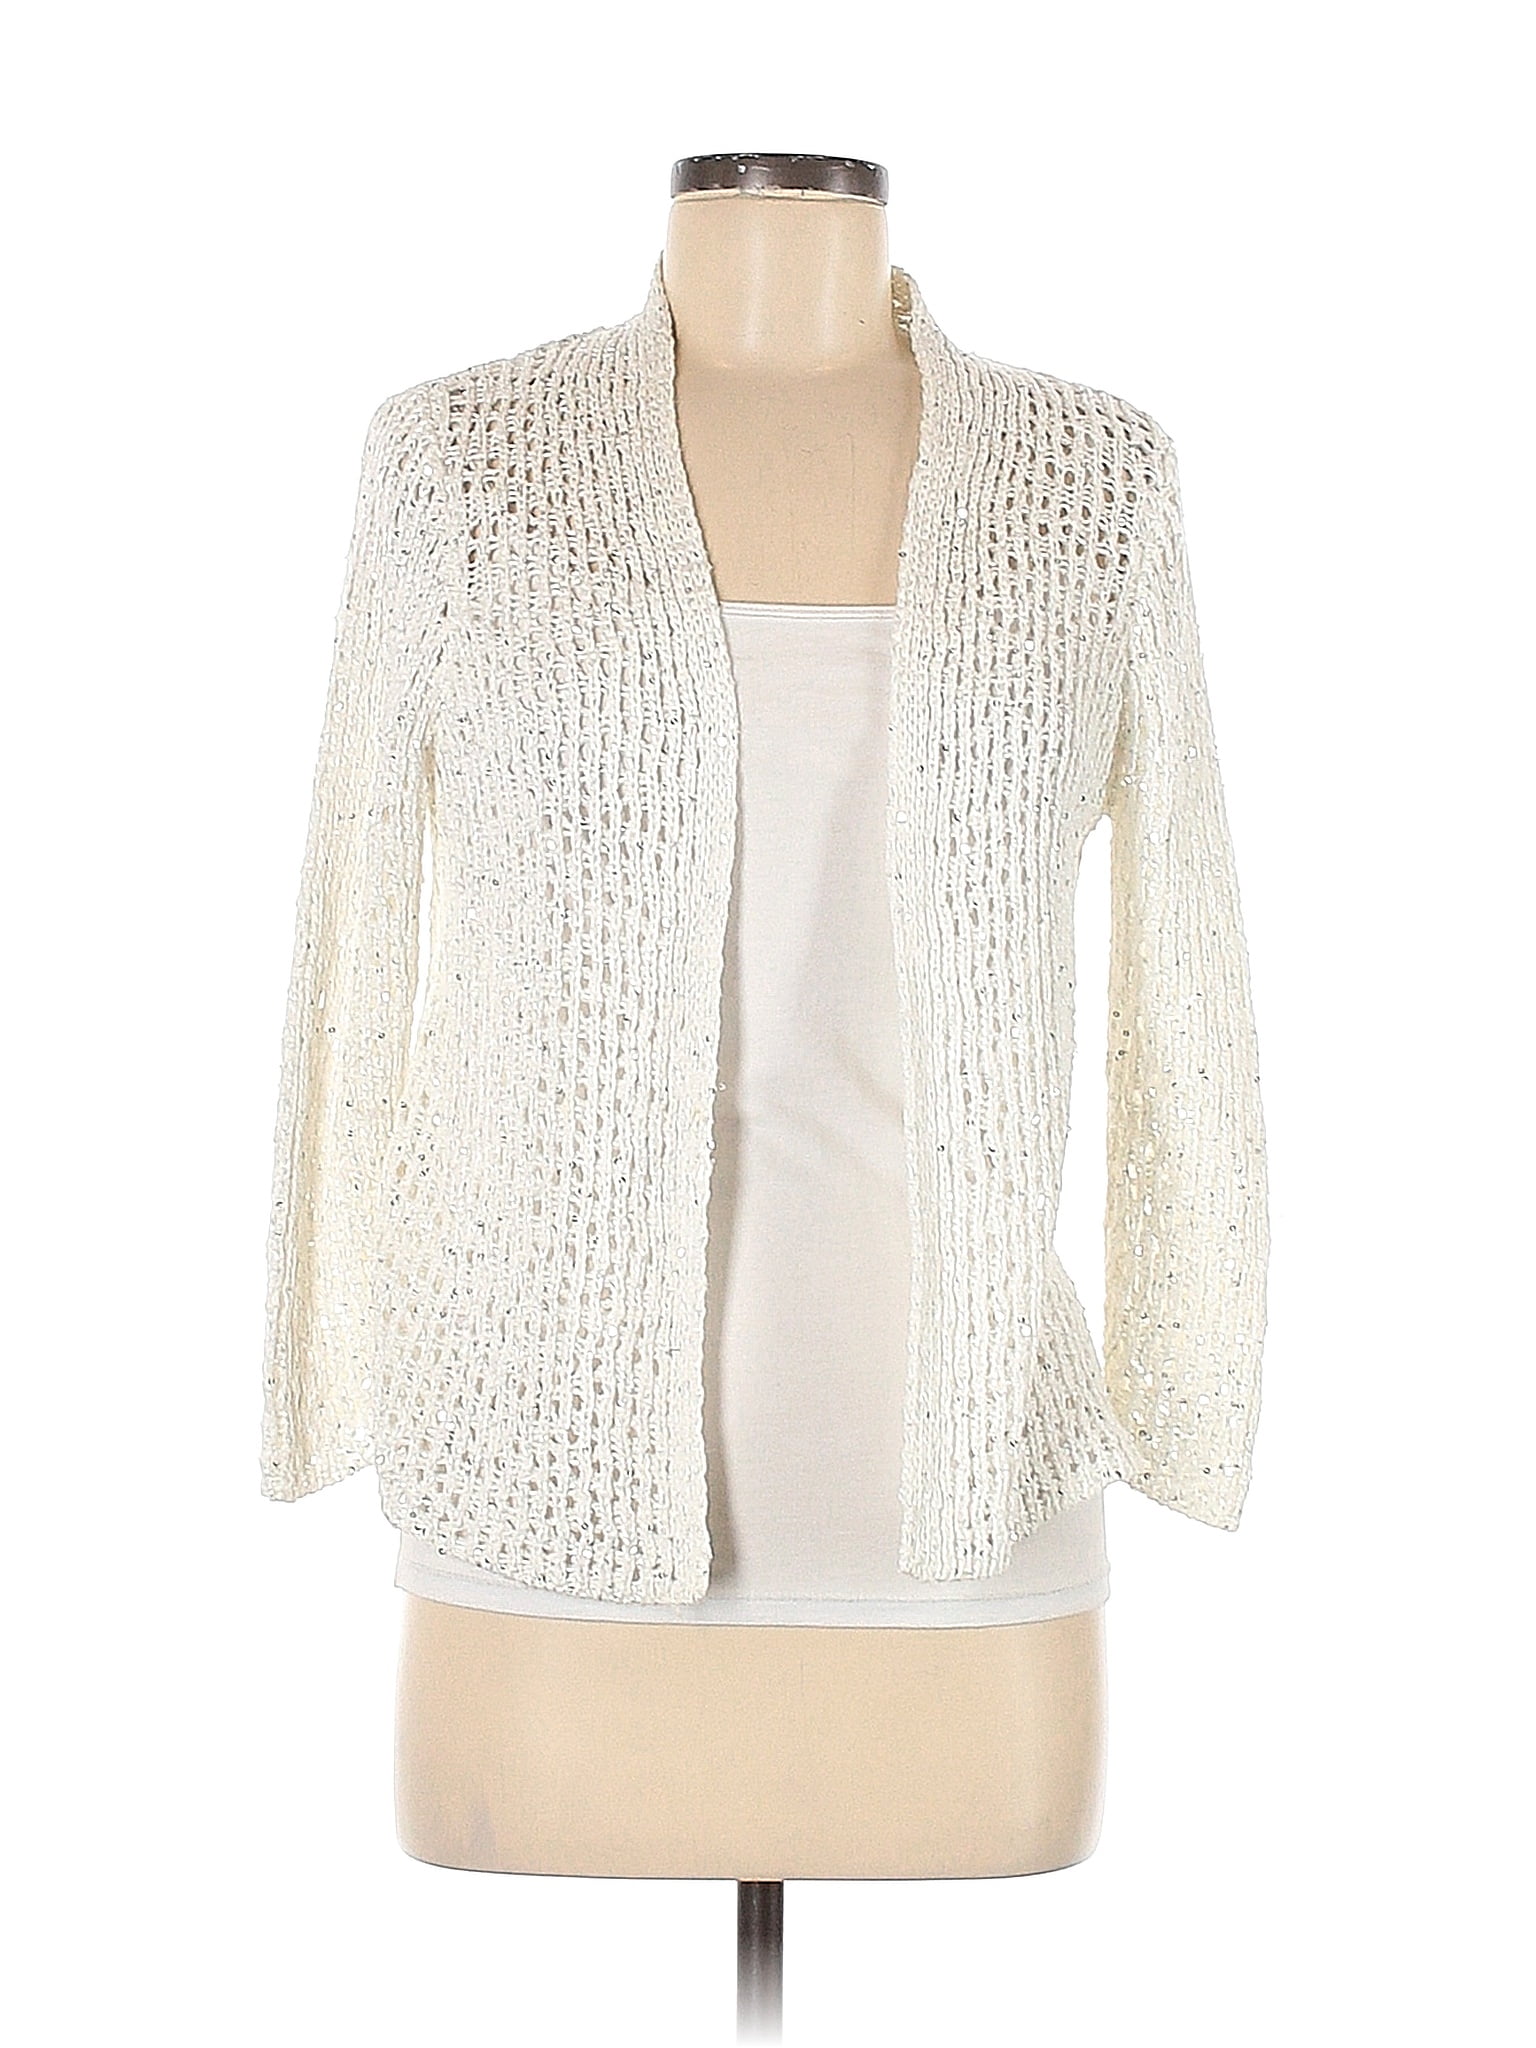 Grace Elements Color Block Solid Ivory Cardigan Size M - 62% off | thredUP